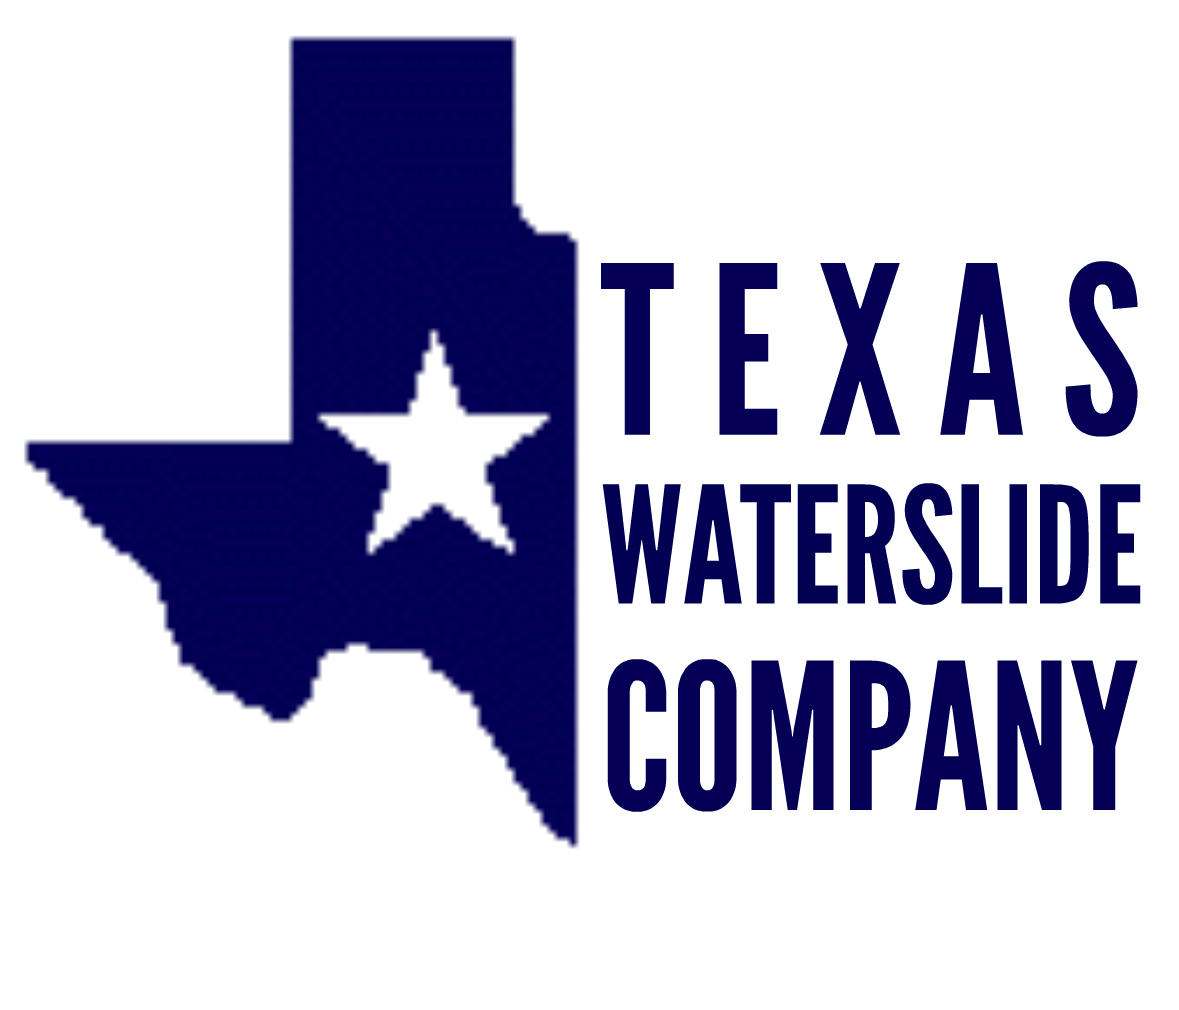 Texas Waterslide Company